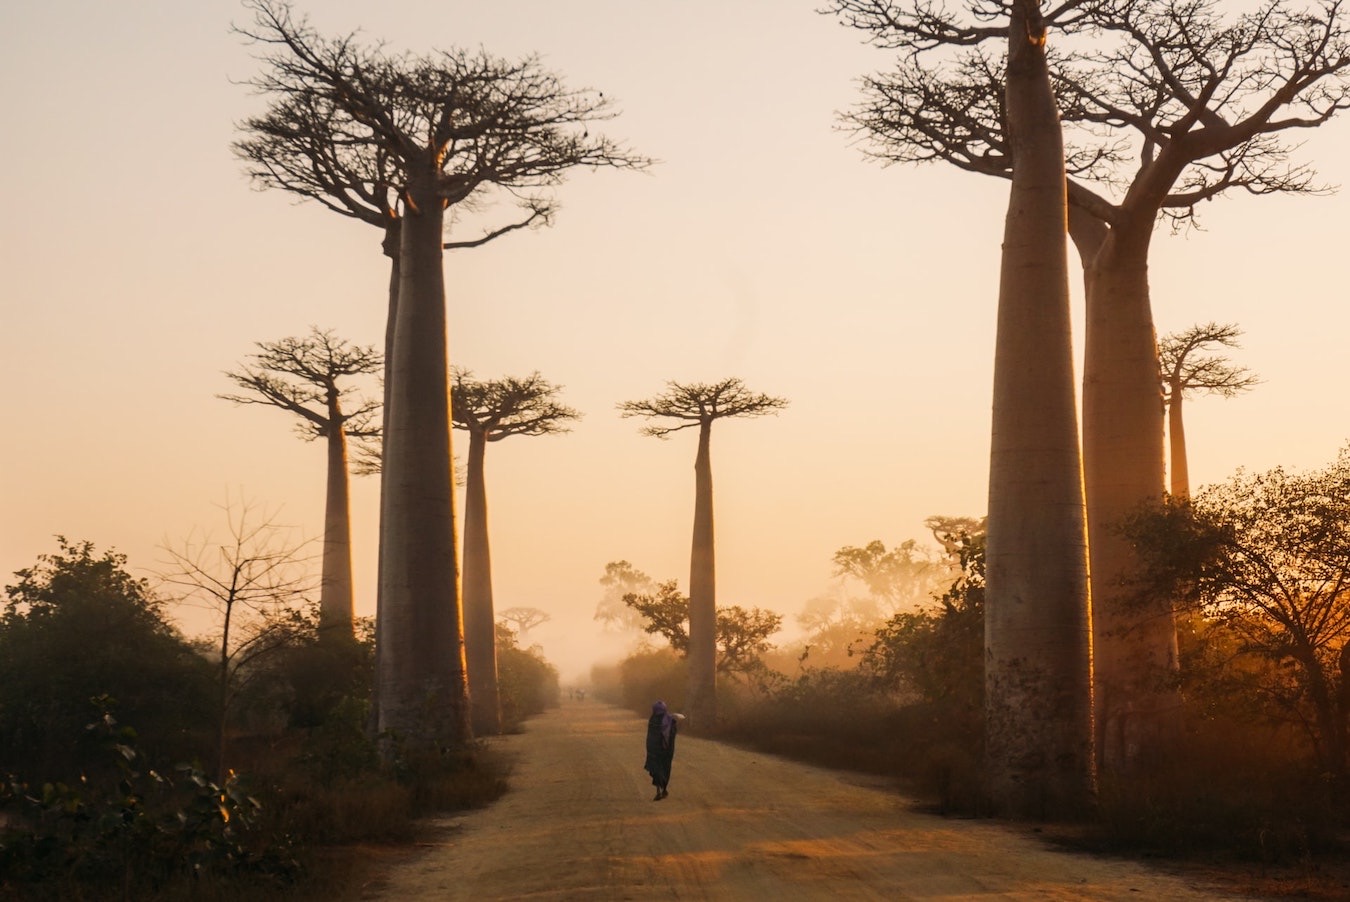 Madagascar Photo © Yasmine Arfaoui via Unsplash